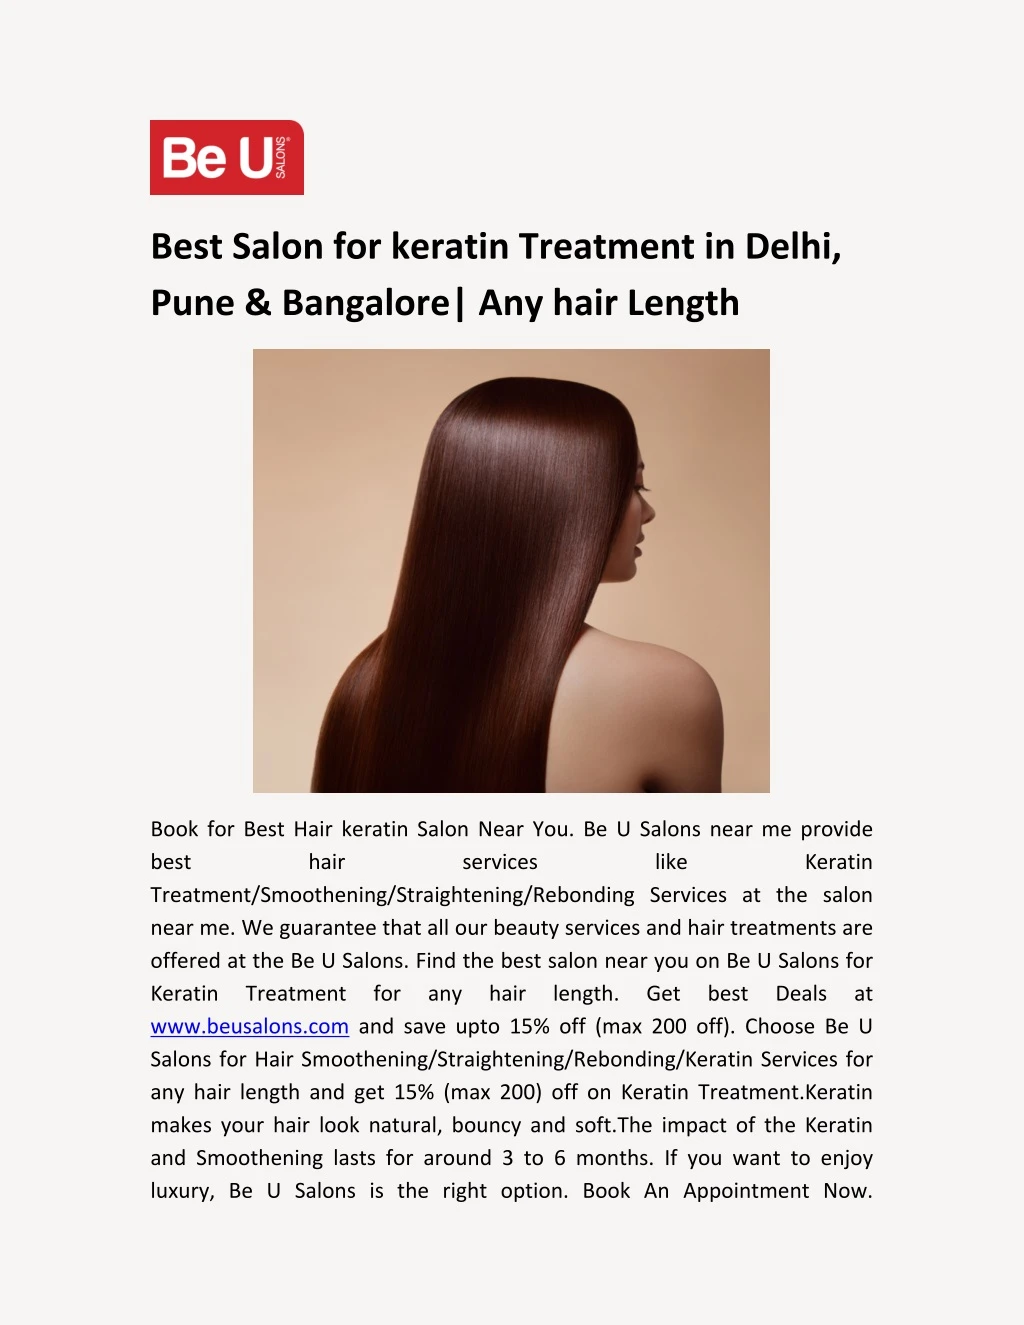 best salon for keratin treatment in delhi pune